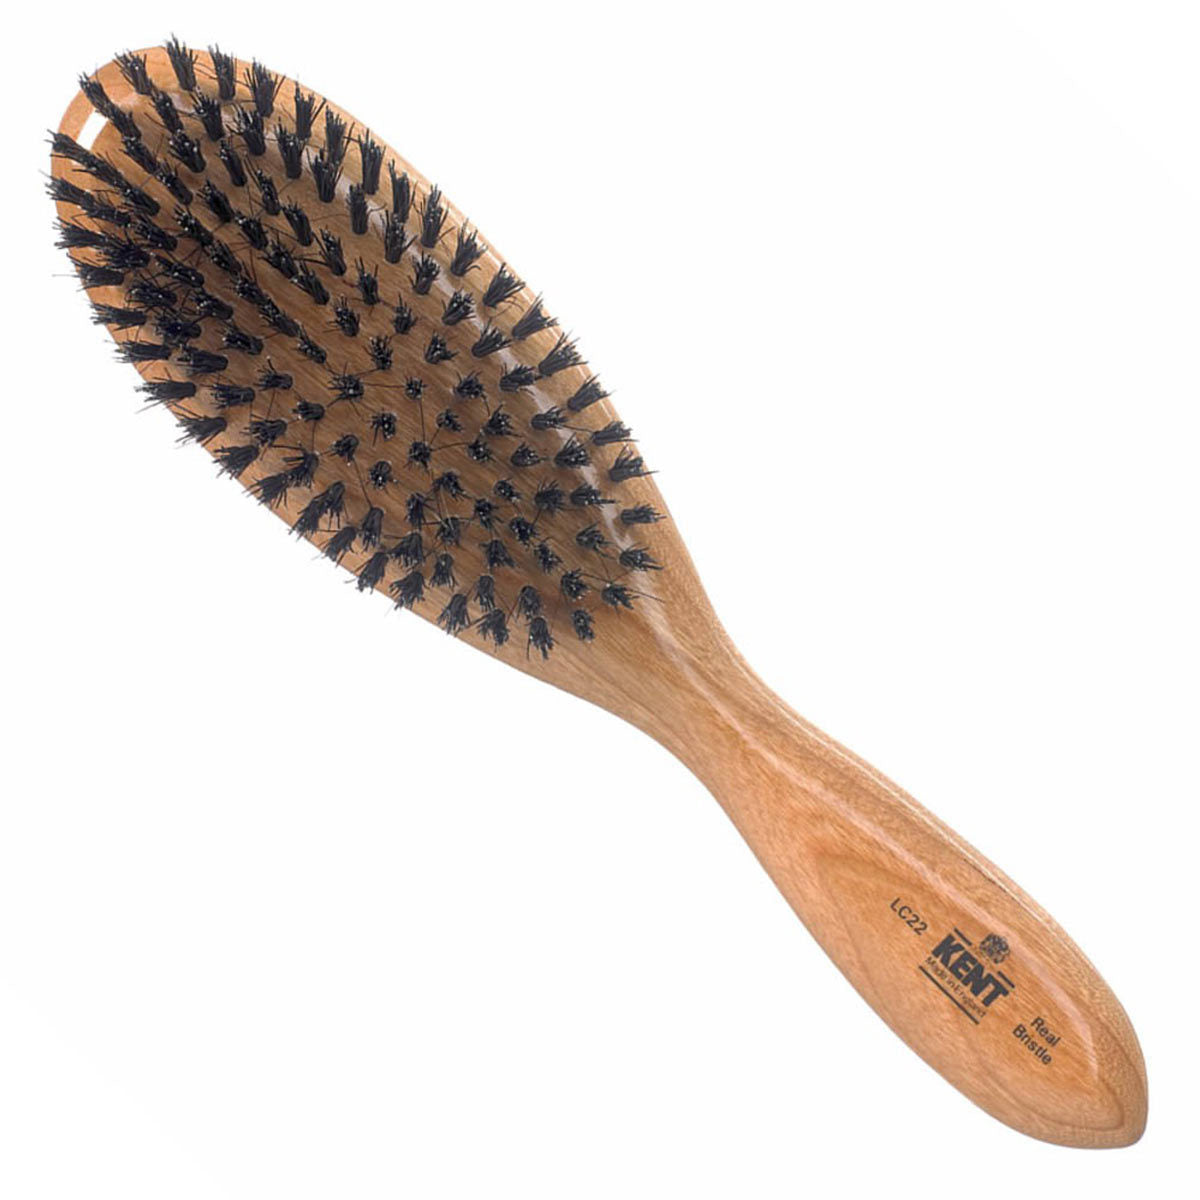 Primary image of Ladies Oval Hair Brush Black (LC22)